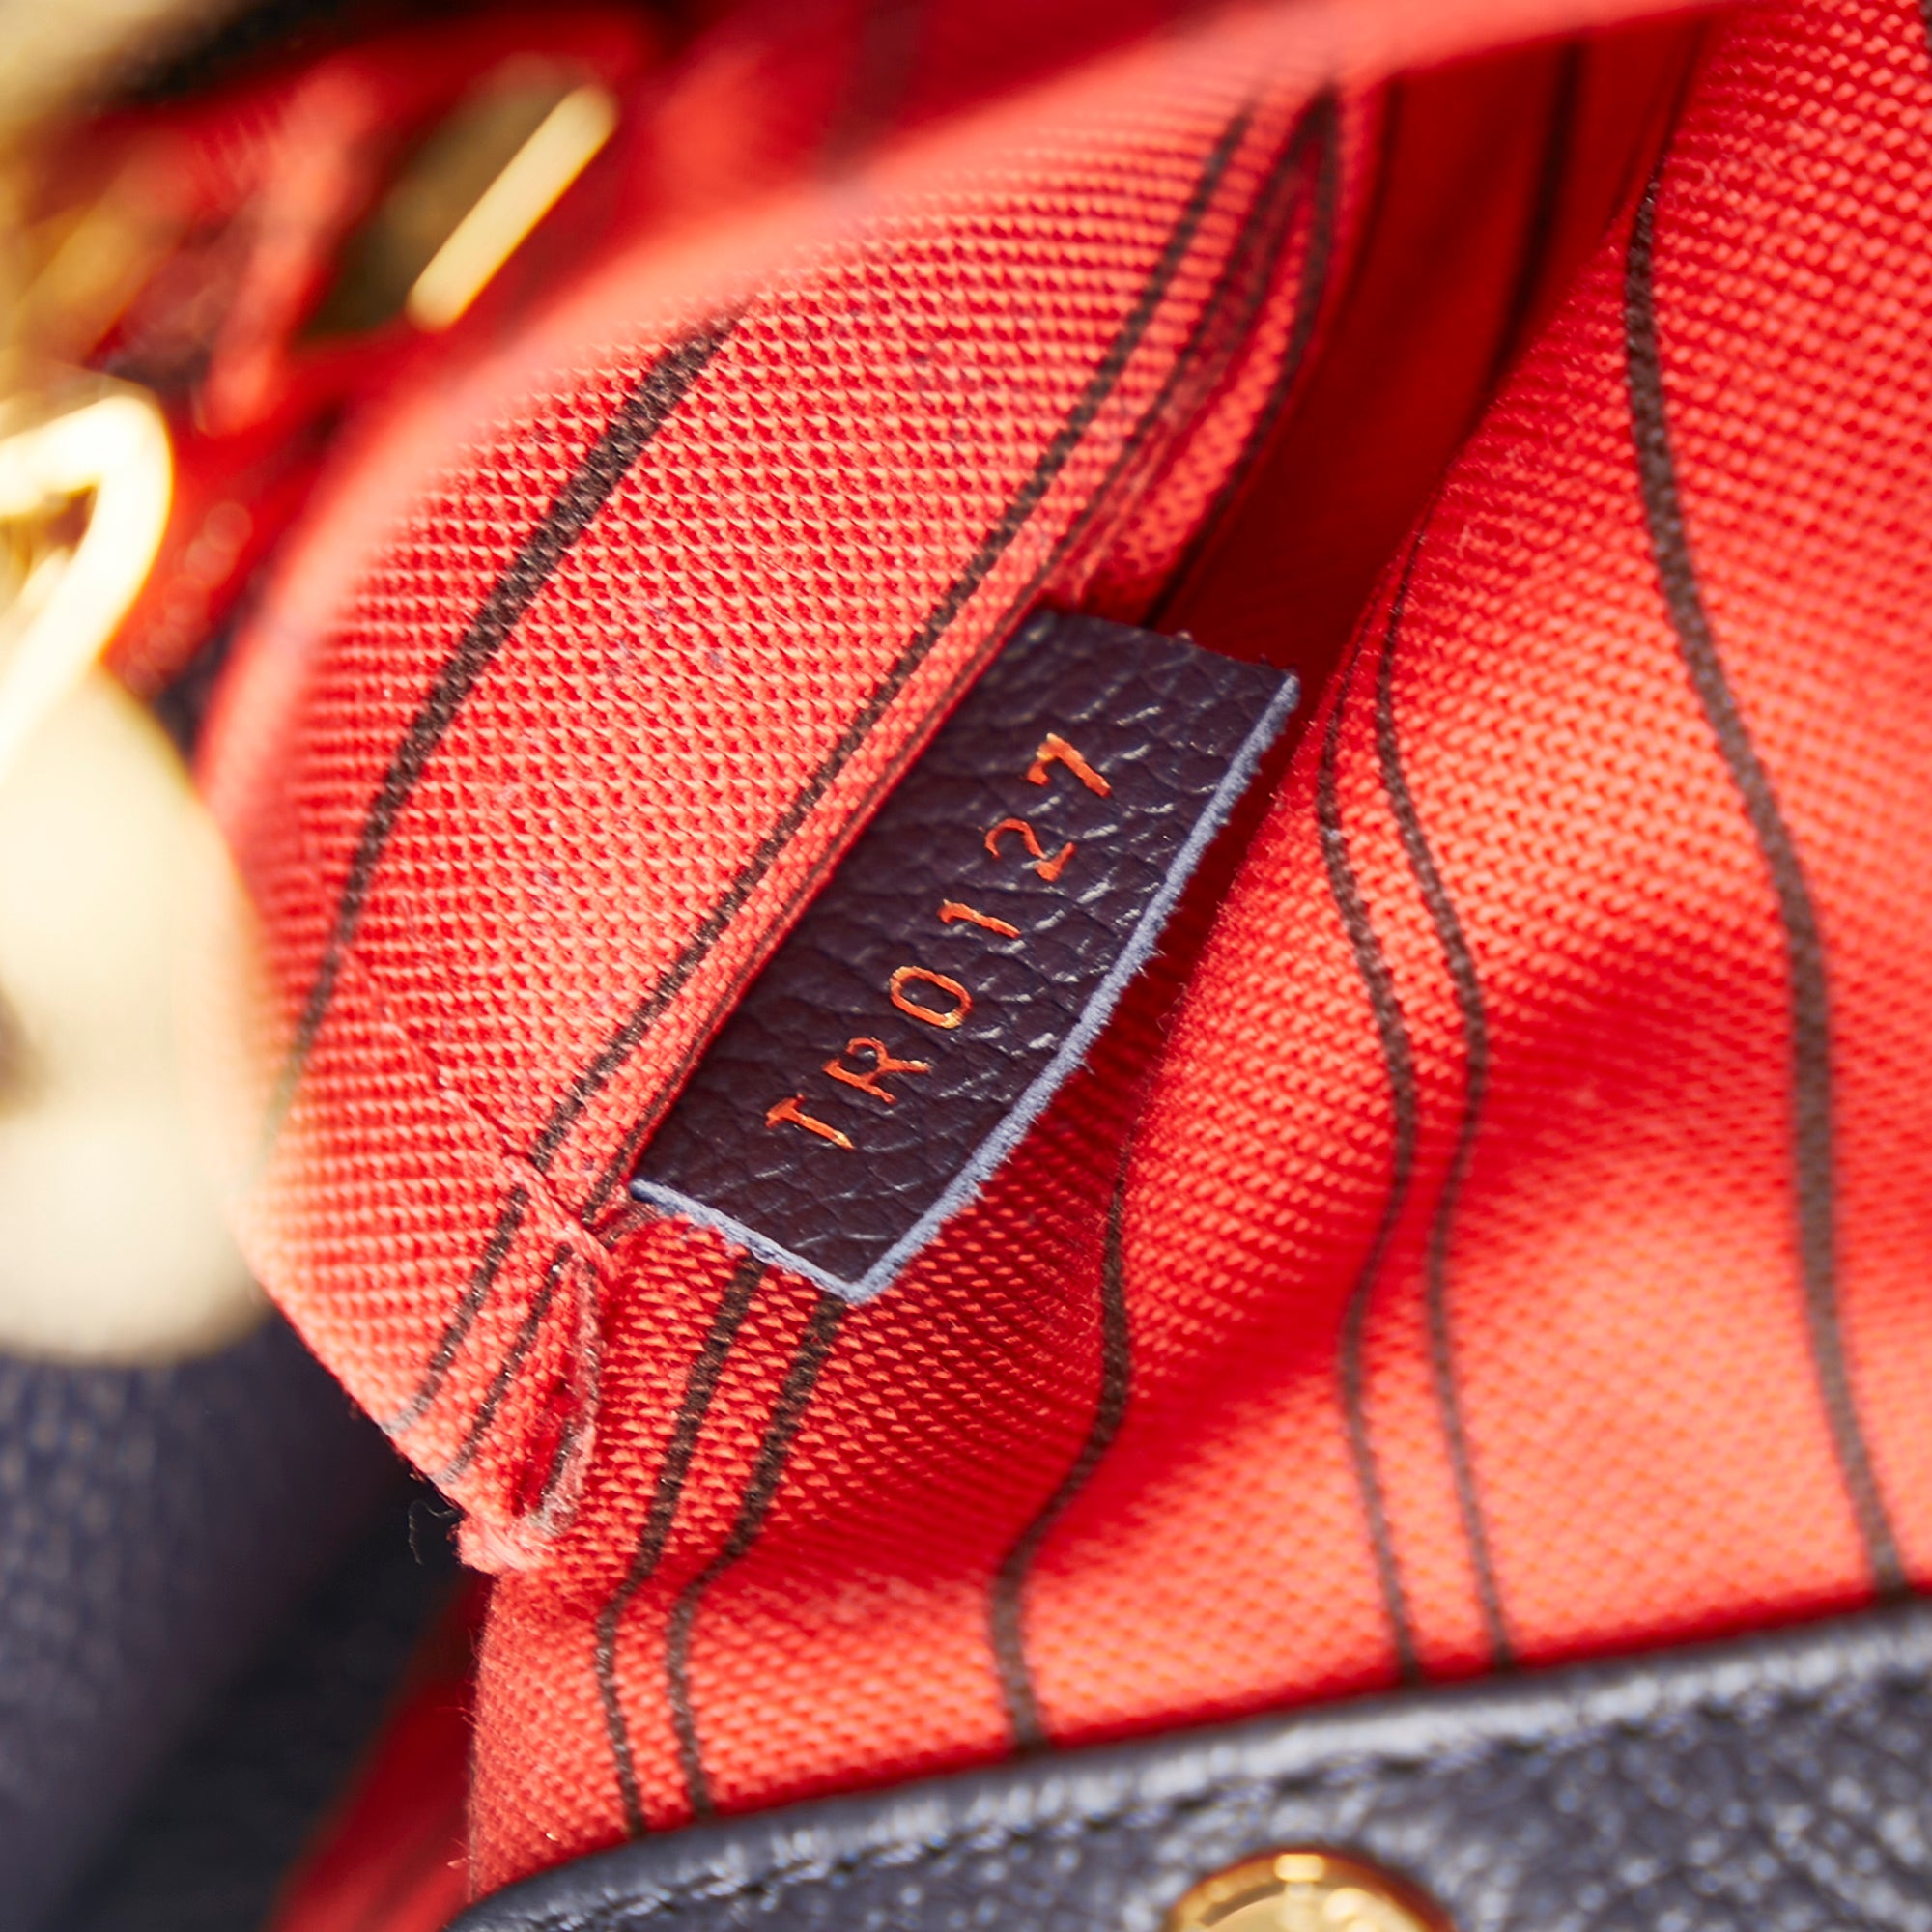 Preloved Louis Vuitton Montaigne BB Empreinte Monogram Bag with Crossbody Strap 040623 - $500 OFF LIVE SHOW - NO ADDITIONAL DISCOUNTS